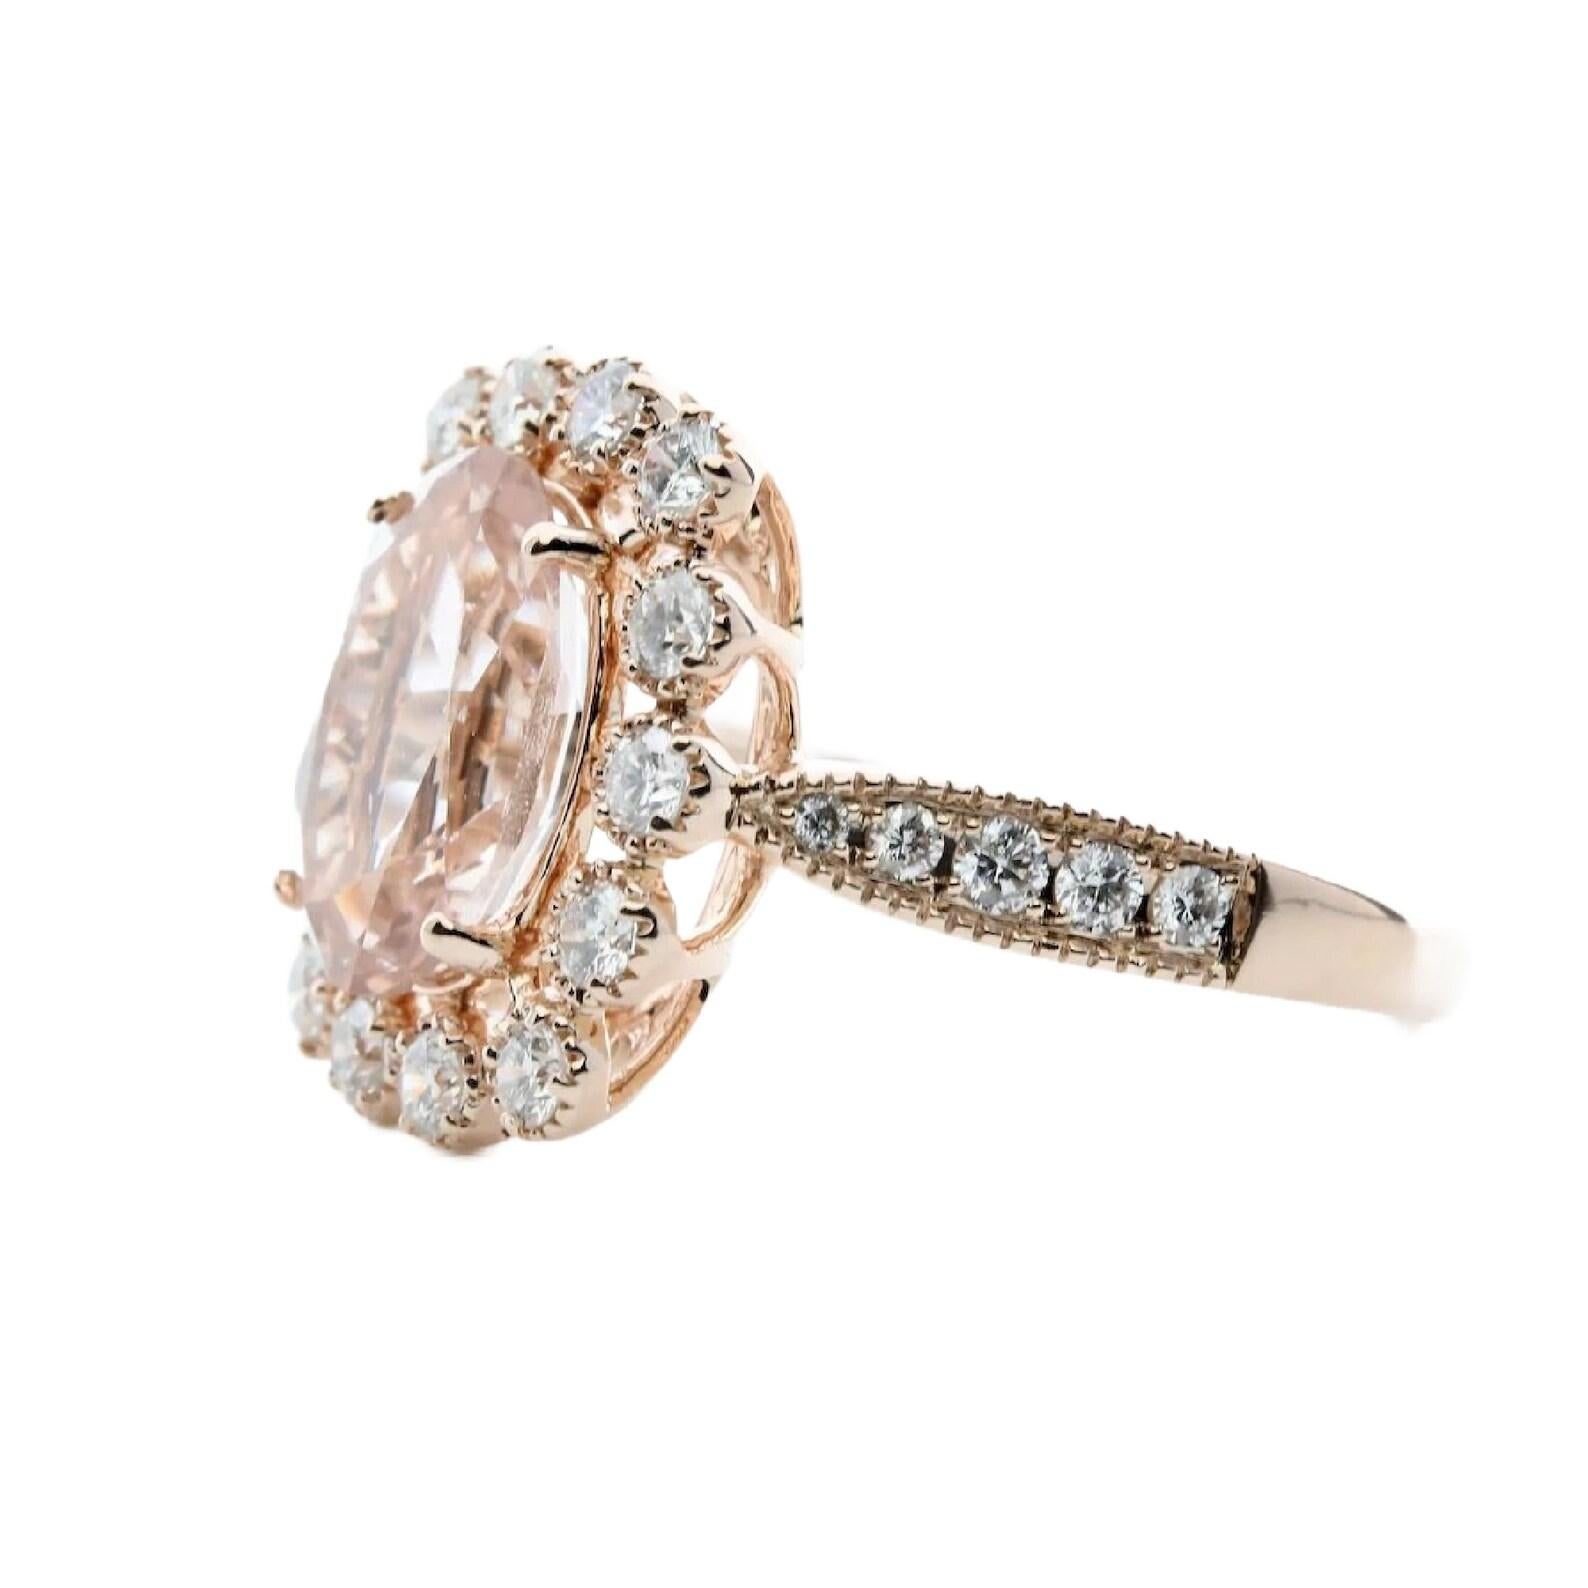 Morganite & Bezel Set Diamond Ring in 14K Rose Gold In Good Condition For Sale In Boston, MA